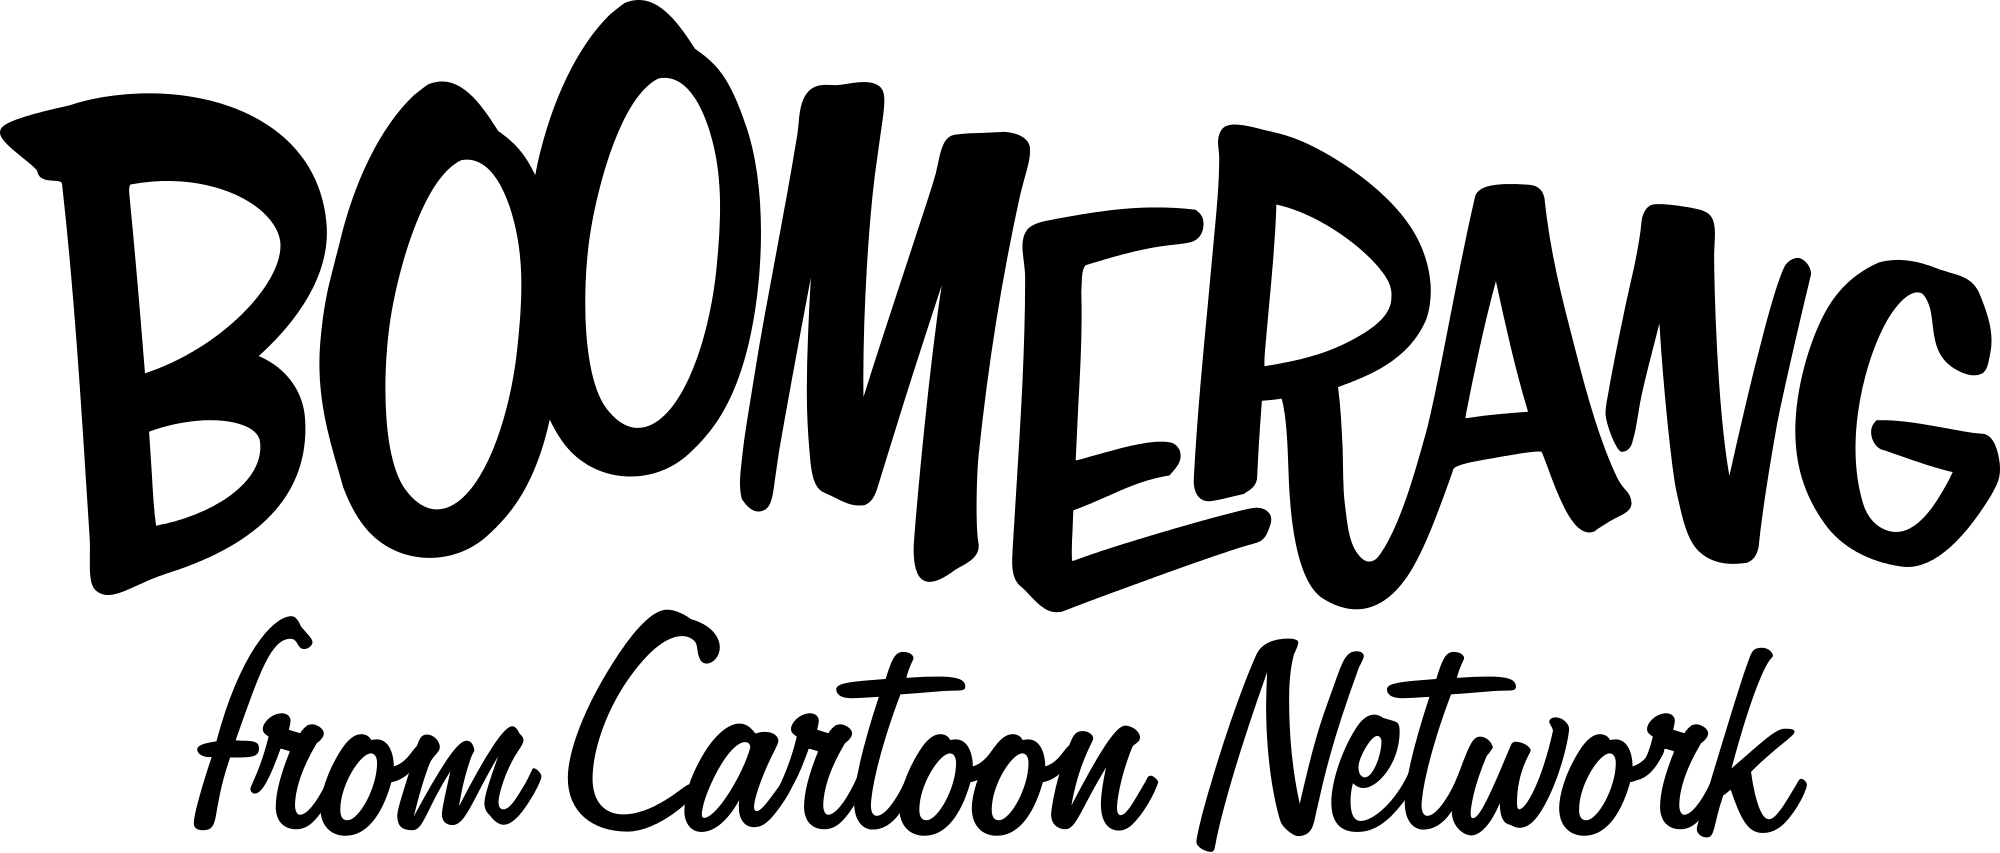 Boomerang Cartoon Network Logo - File:Boomerang from Cartoon Network logo.svg - Wikimedia Commons